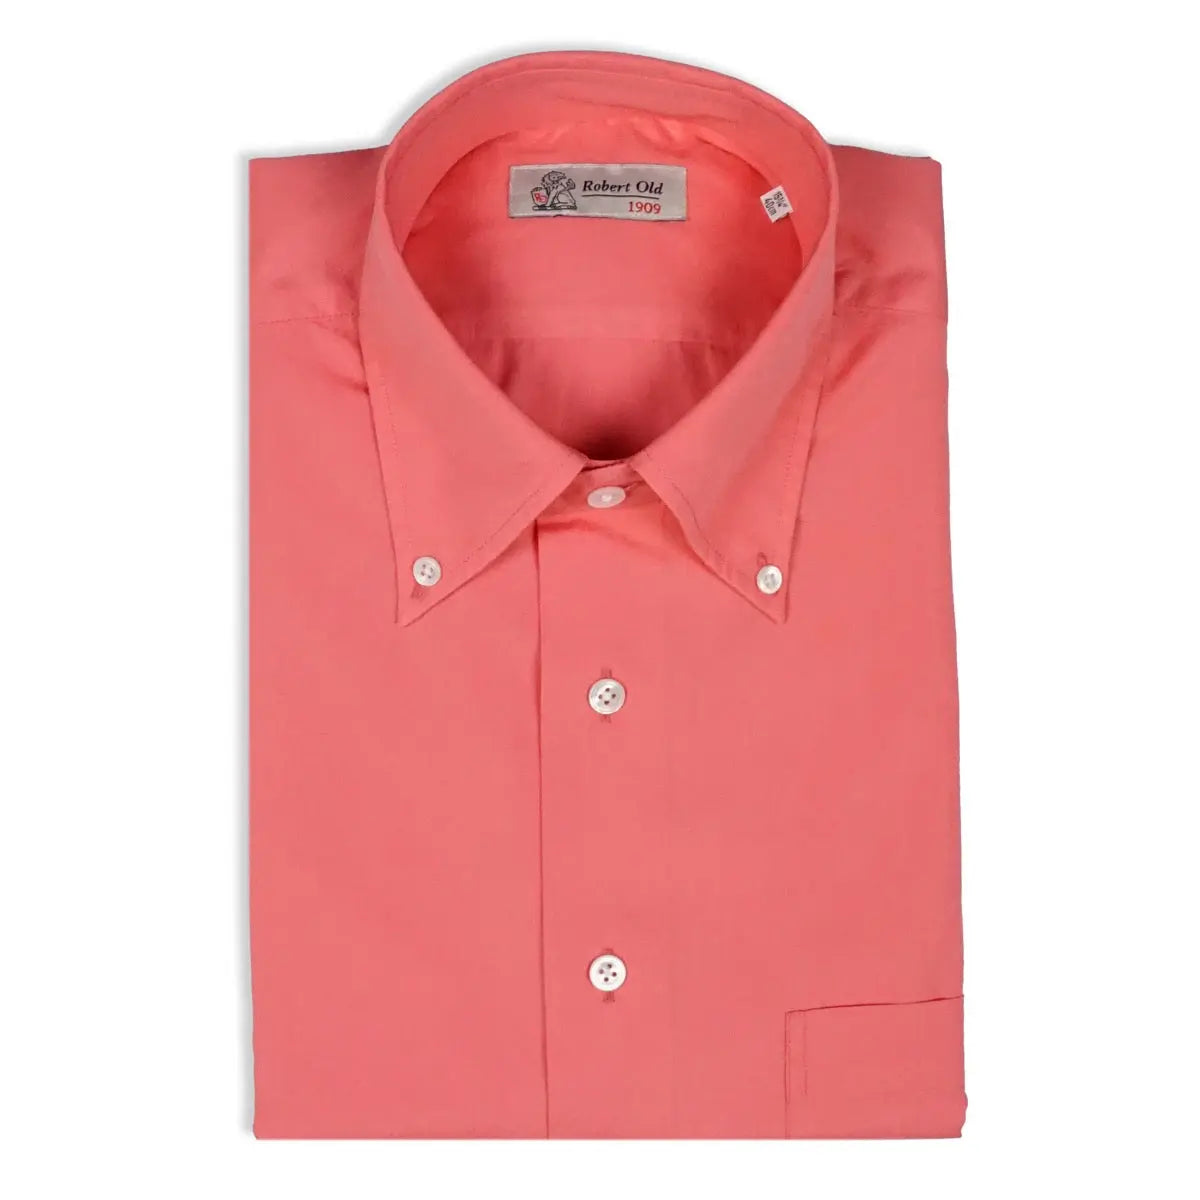 Coral Pink Supraluxe Swiss Cotton Poplin Long Sleeve Shirt  Robert Old   